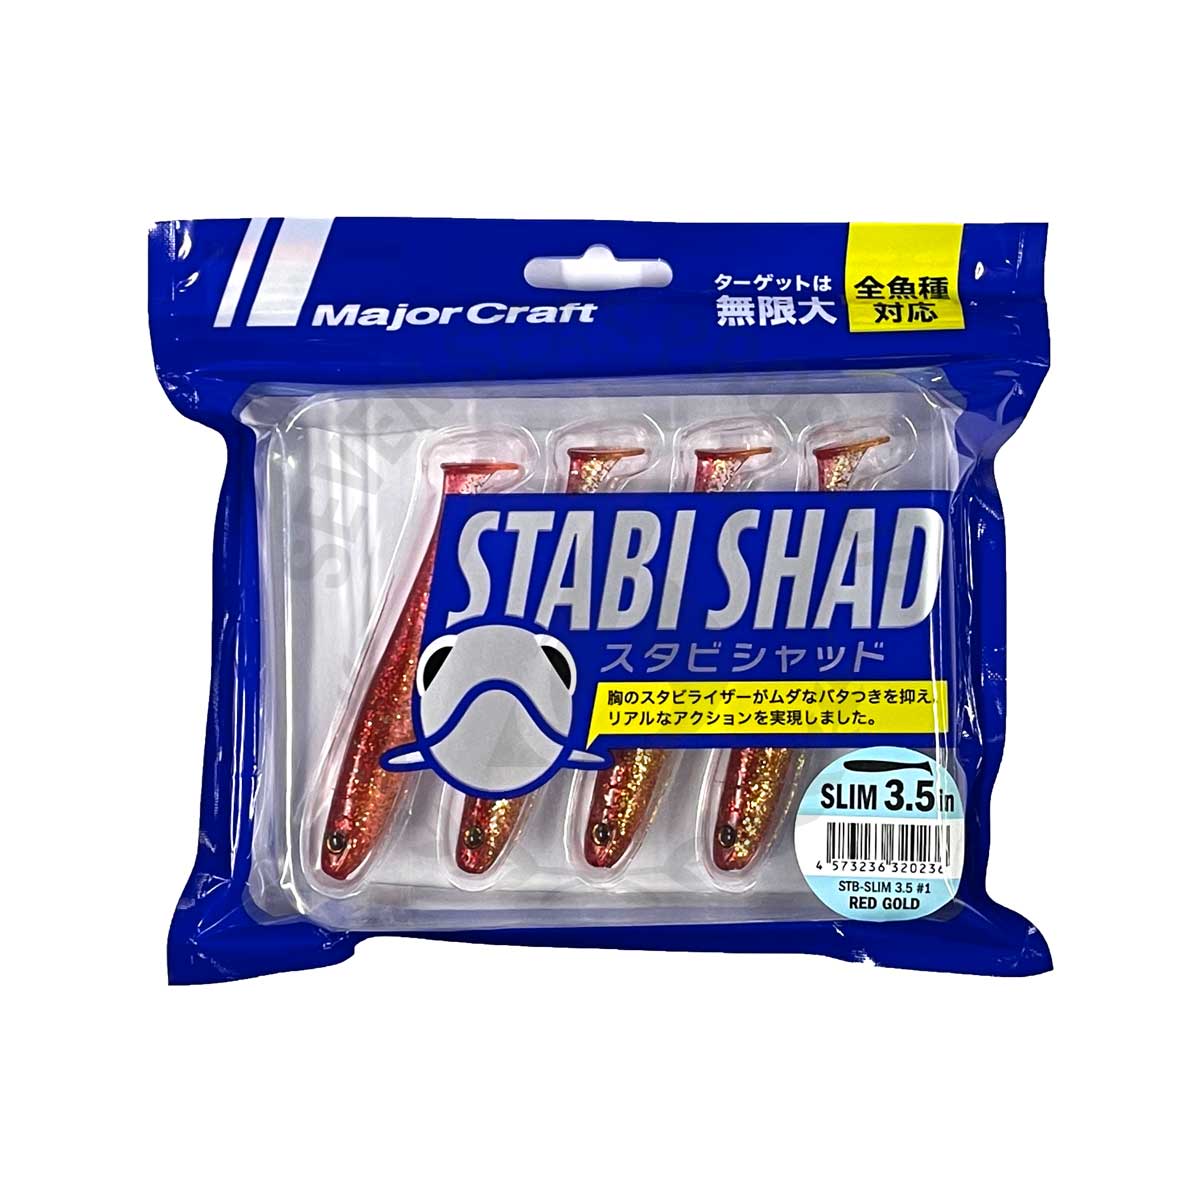 Major Craft Stabi Shad STB-SLIM 3.5 #1-Red Gold*เหยื่อปลายาง - 7